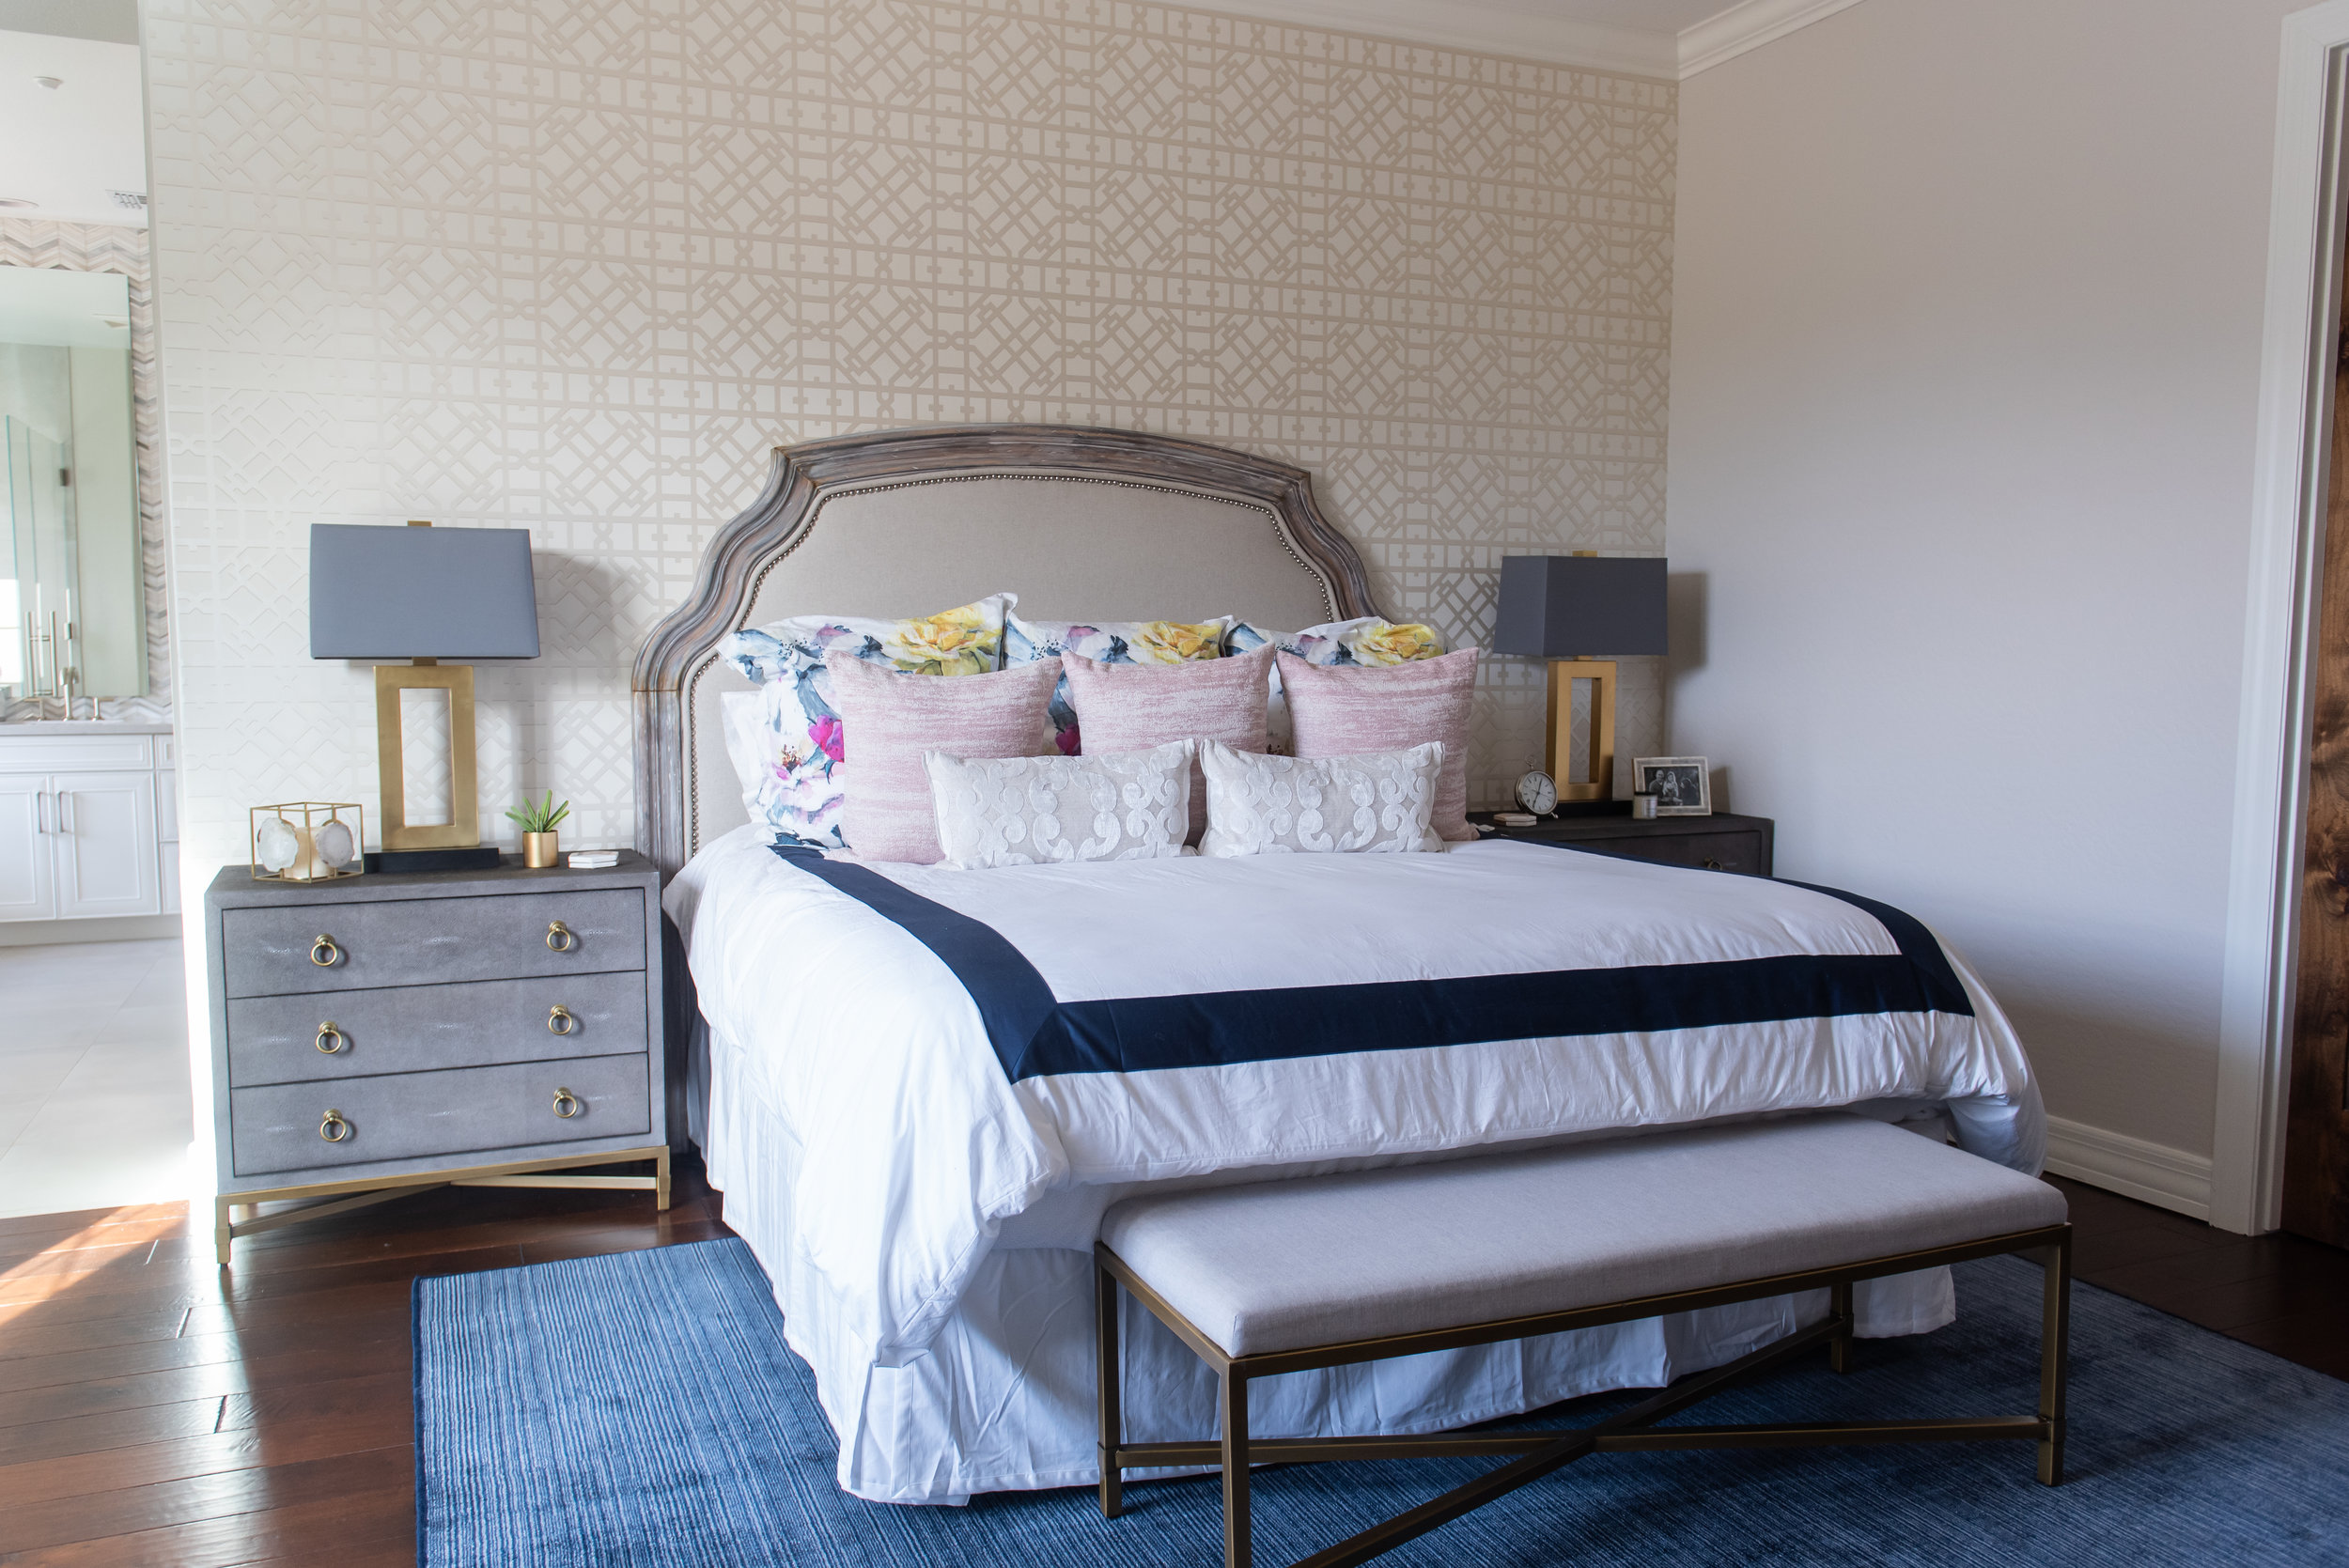 Master bedroom +lamp +nightstand +throw pillows +bedding +wallpaper +headboard +bench.jpg